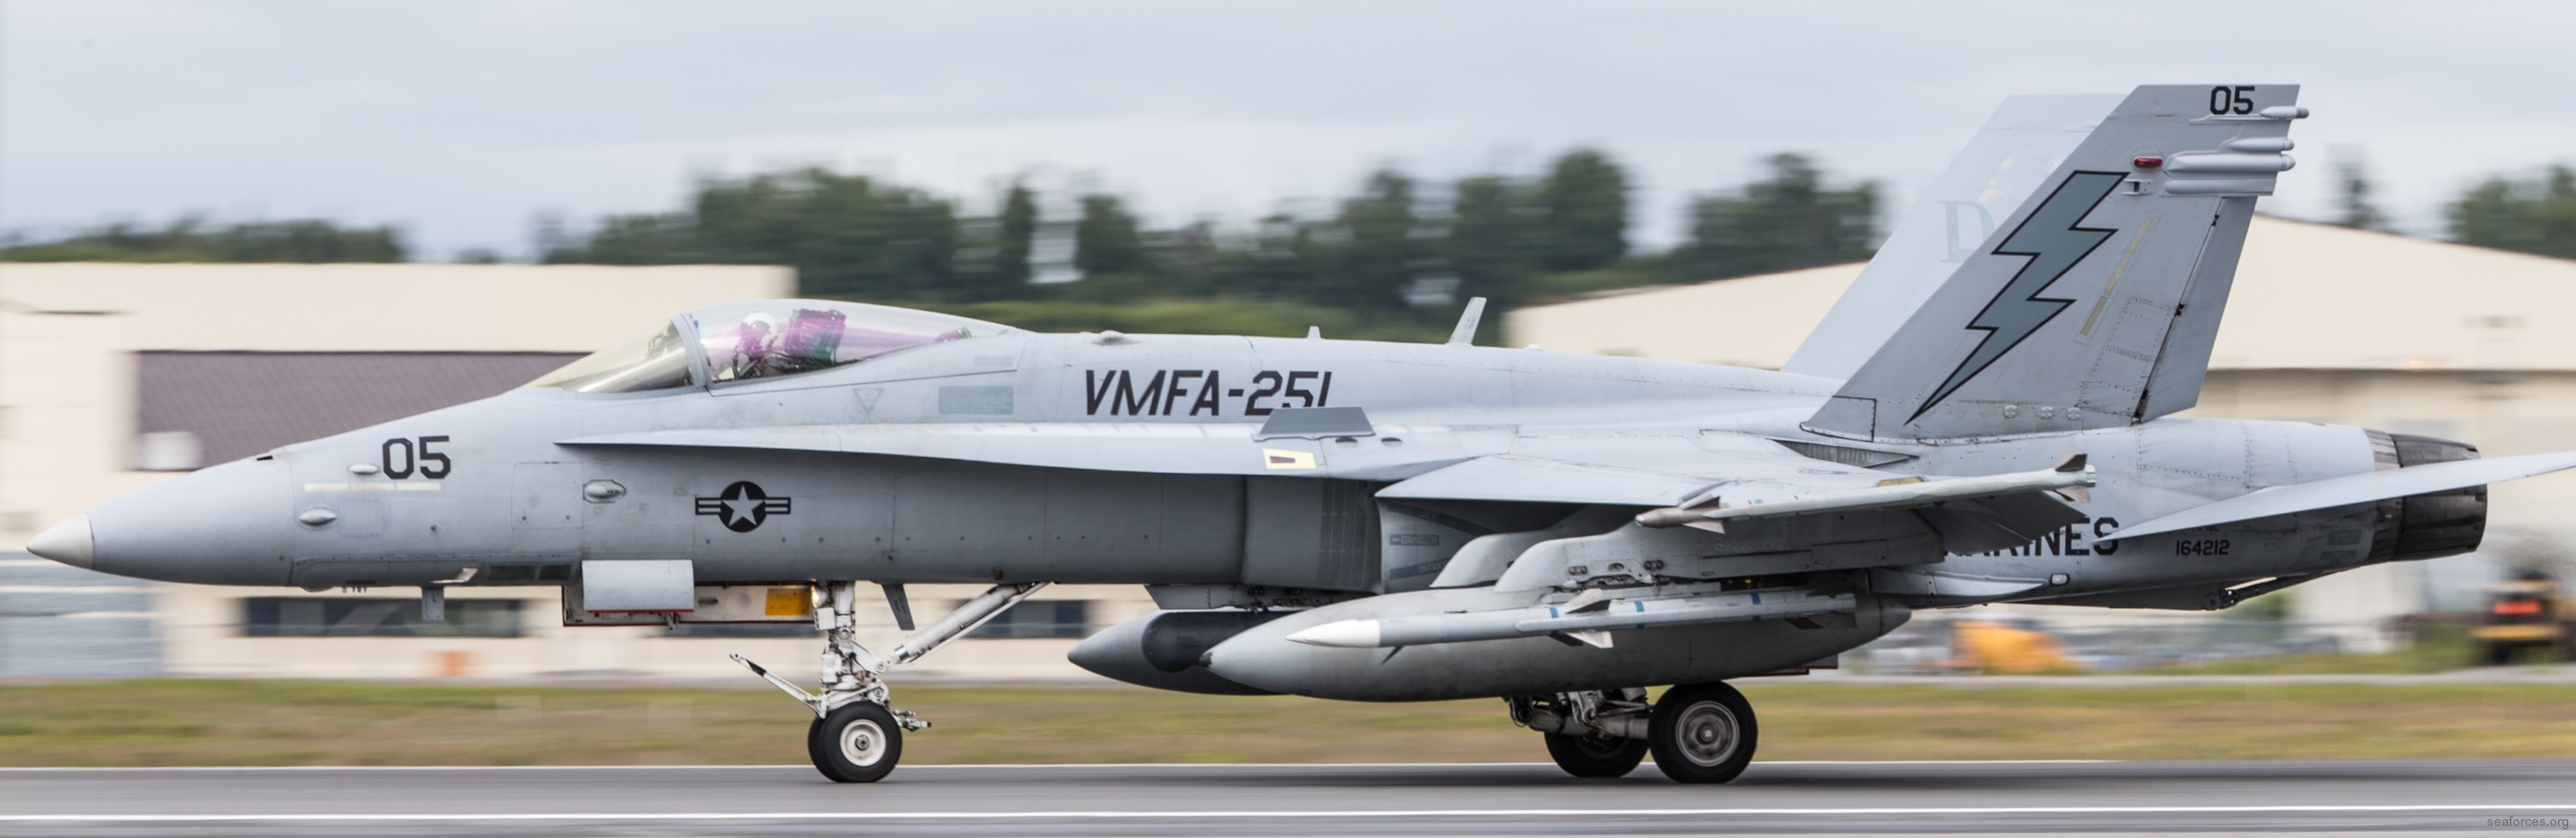 vmfa-251 thunderbolts marine fighter attack squadron f/a-18c hornet 99 exercise red flag alaska elmendorf richardson